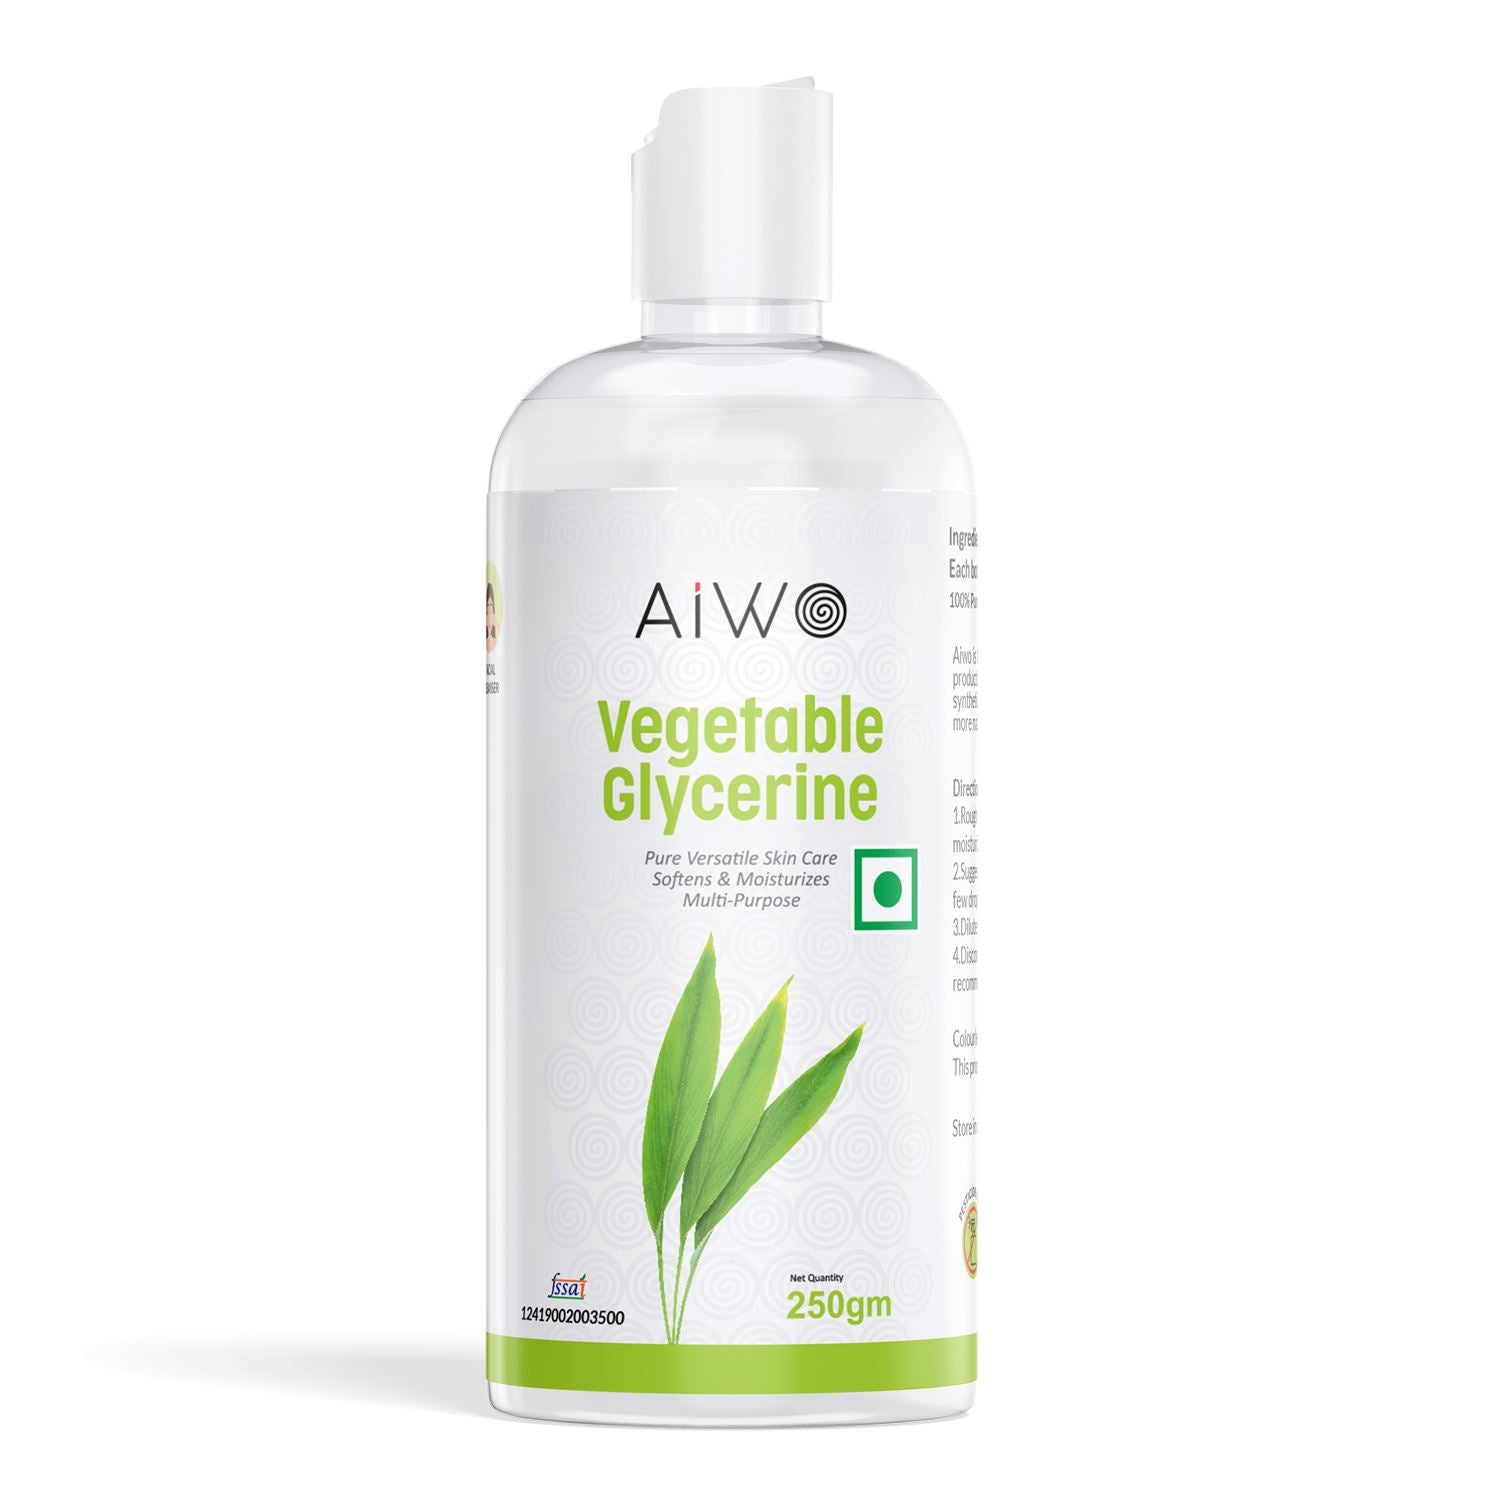 MyDiagnostics Aiwo Vegetable Glycerine 250gms Pure Versatile Skin Care Softens & Moisturizes Multi-Purpose